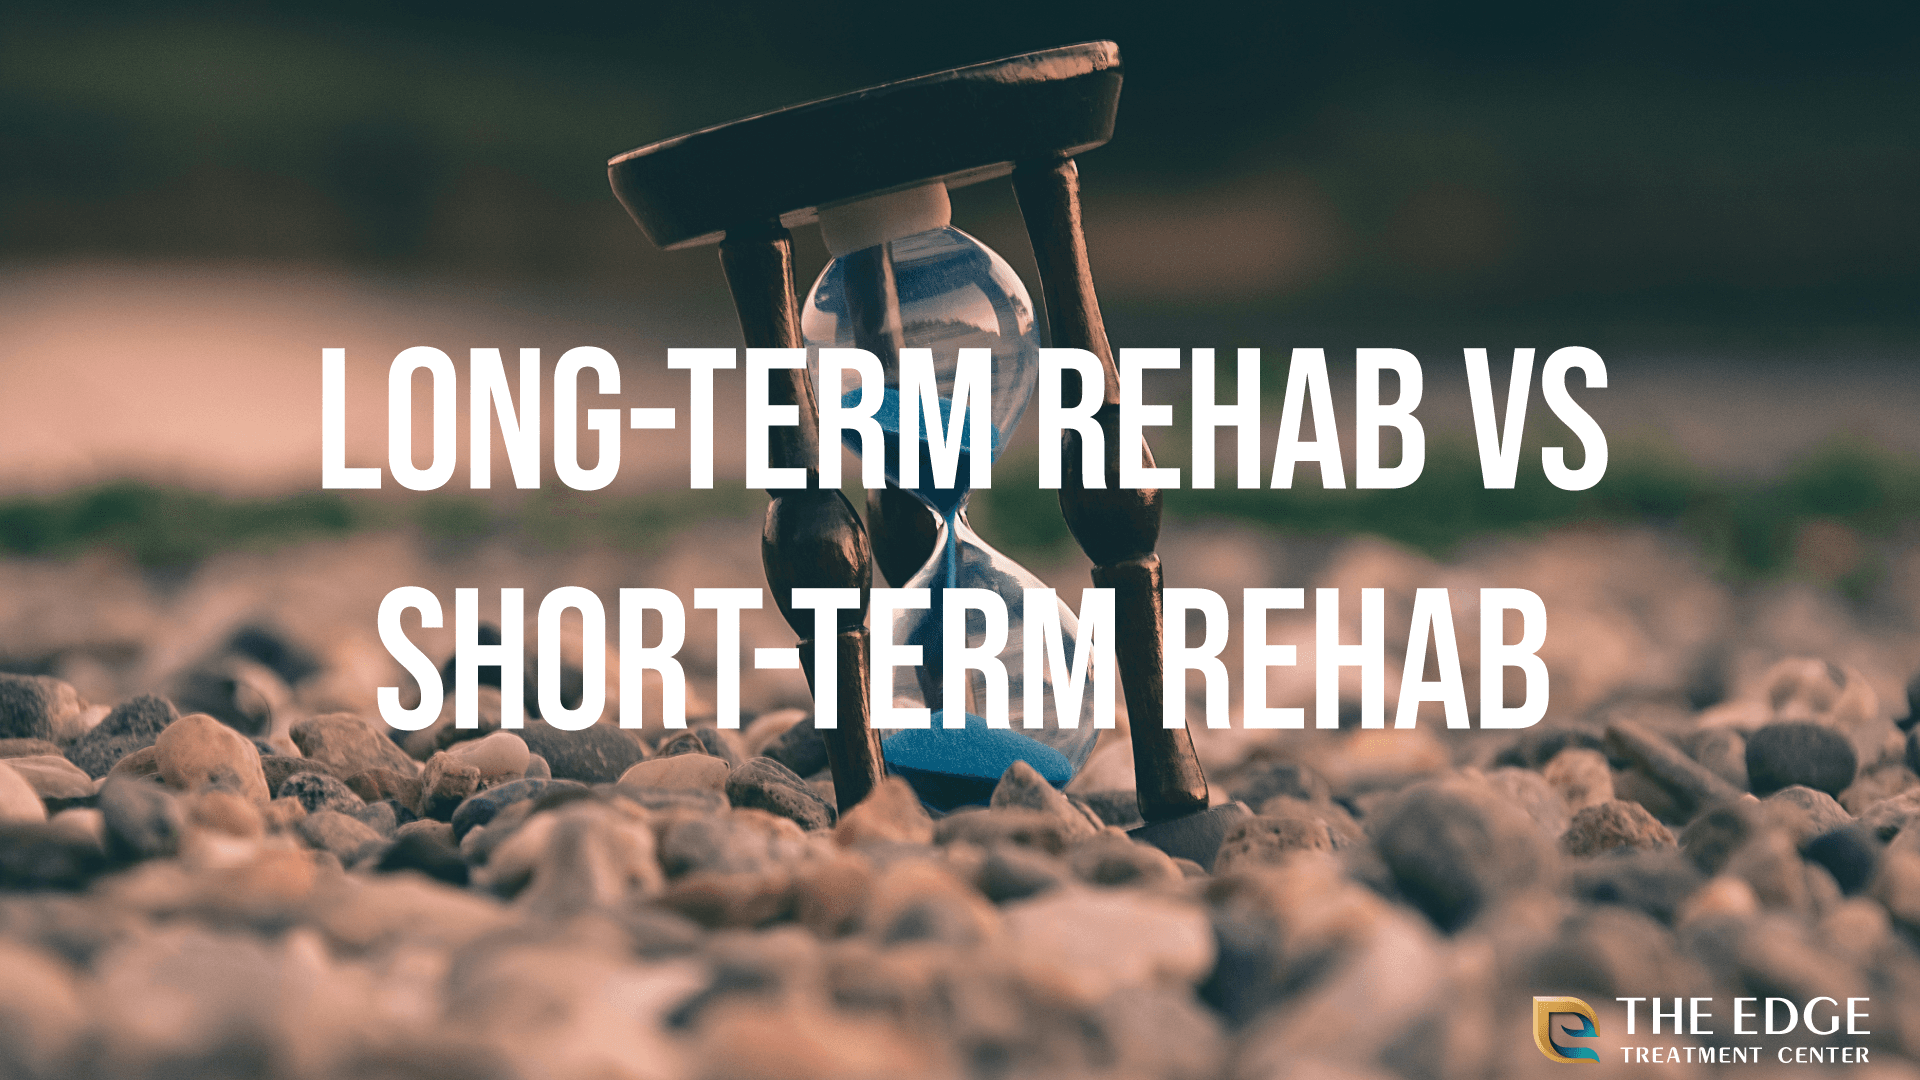 Long-term rehab vs short-term rehab